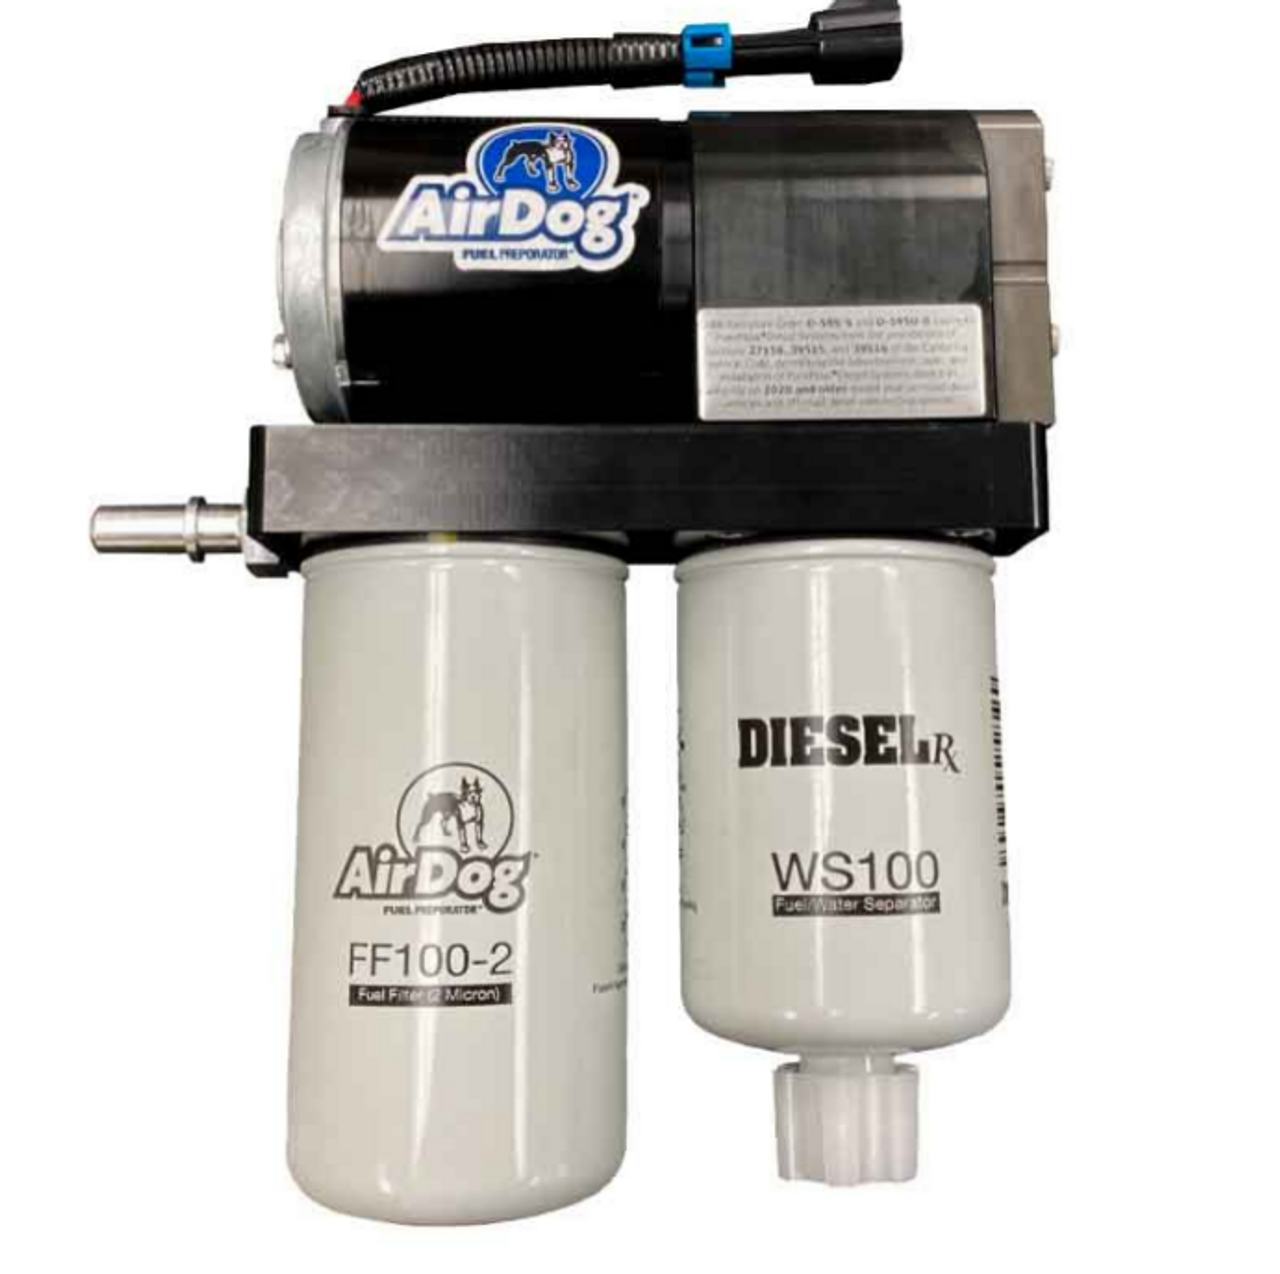  AirDog I-4G Lift Pump Diesel Fuel System 150 GPH for 2015 to 2016 6.6L Duramax (A4SPBC191) Main View